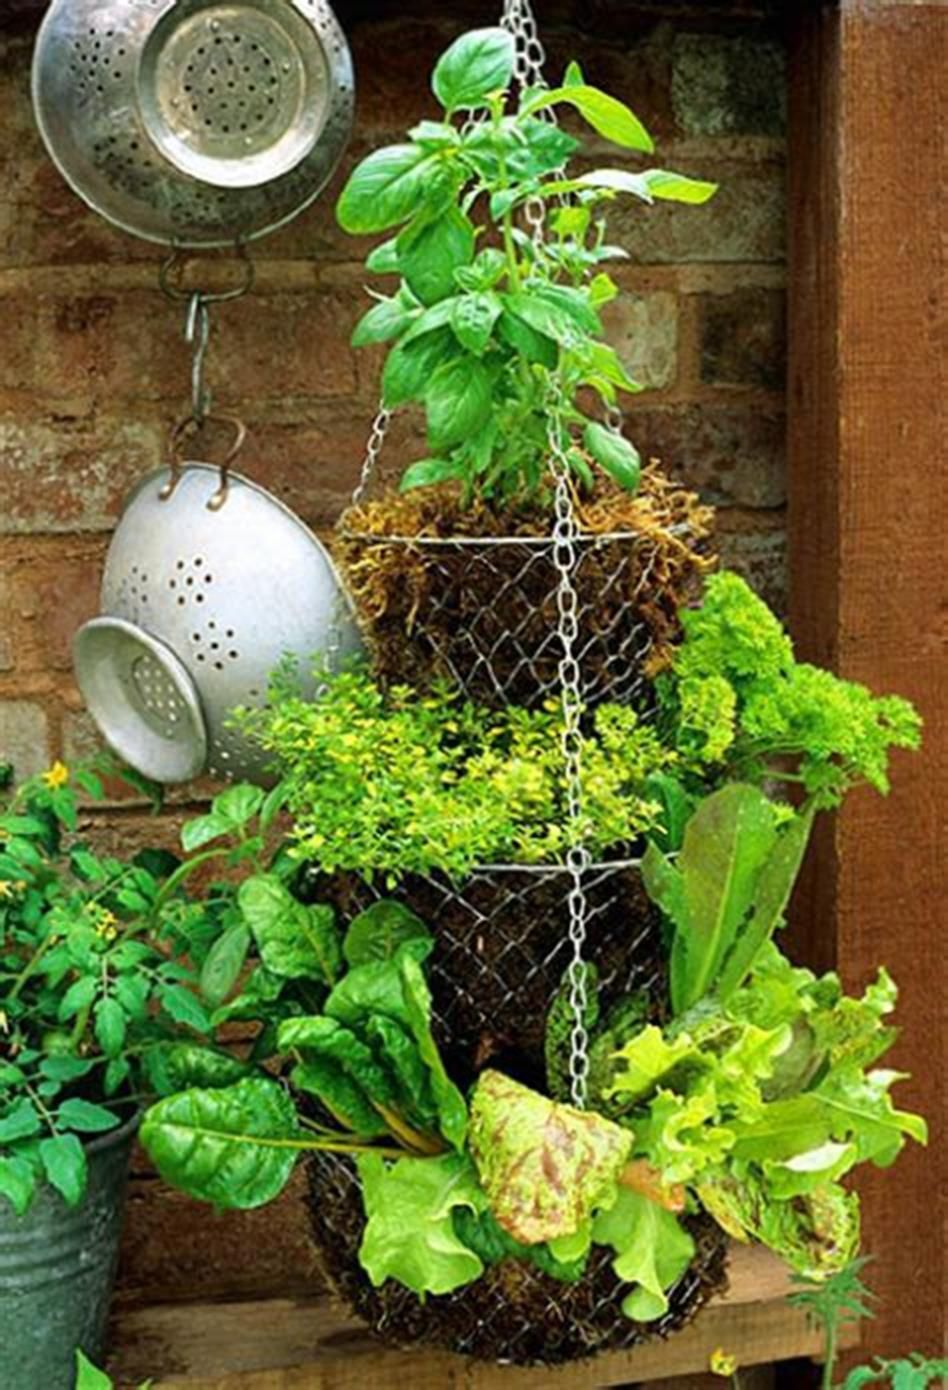 A Potager Herb Garden Herb Garden Design